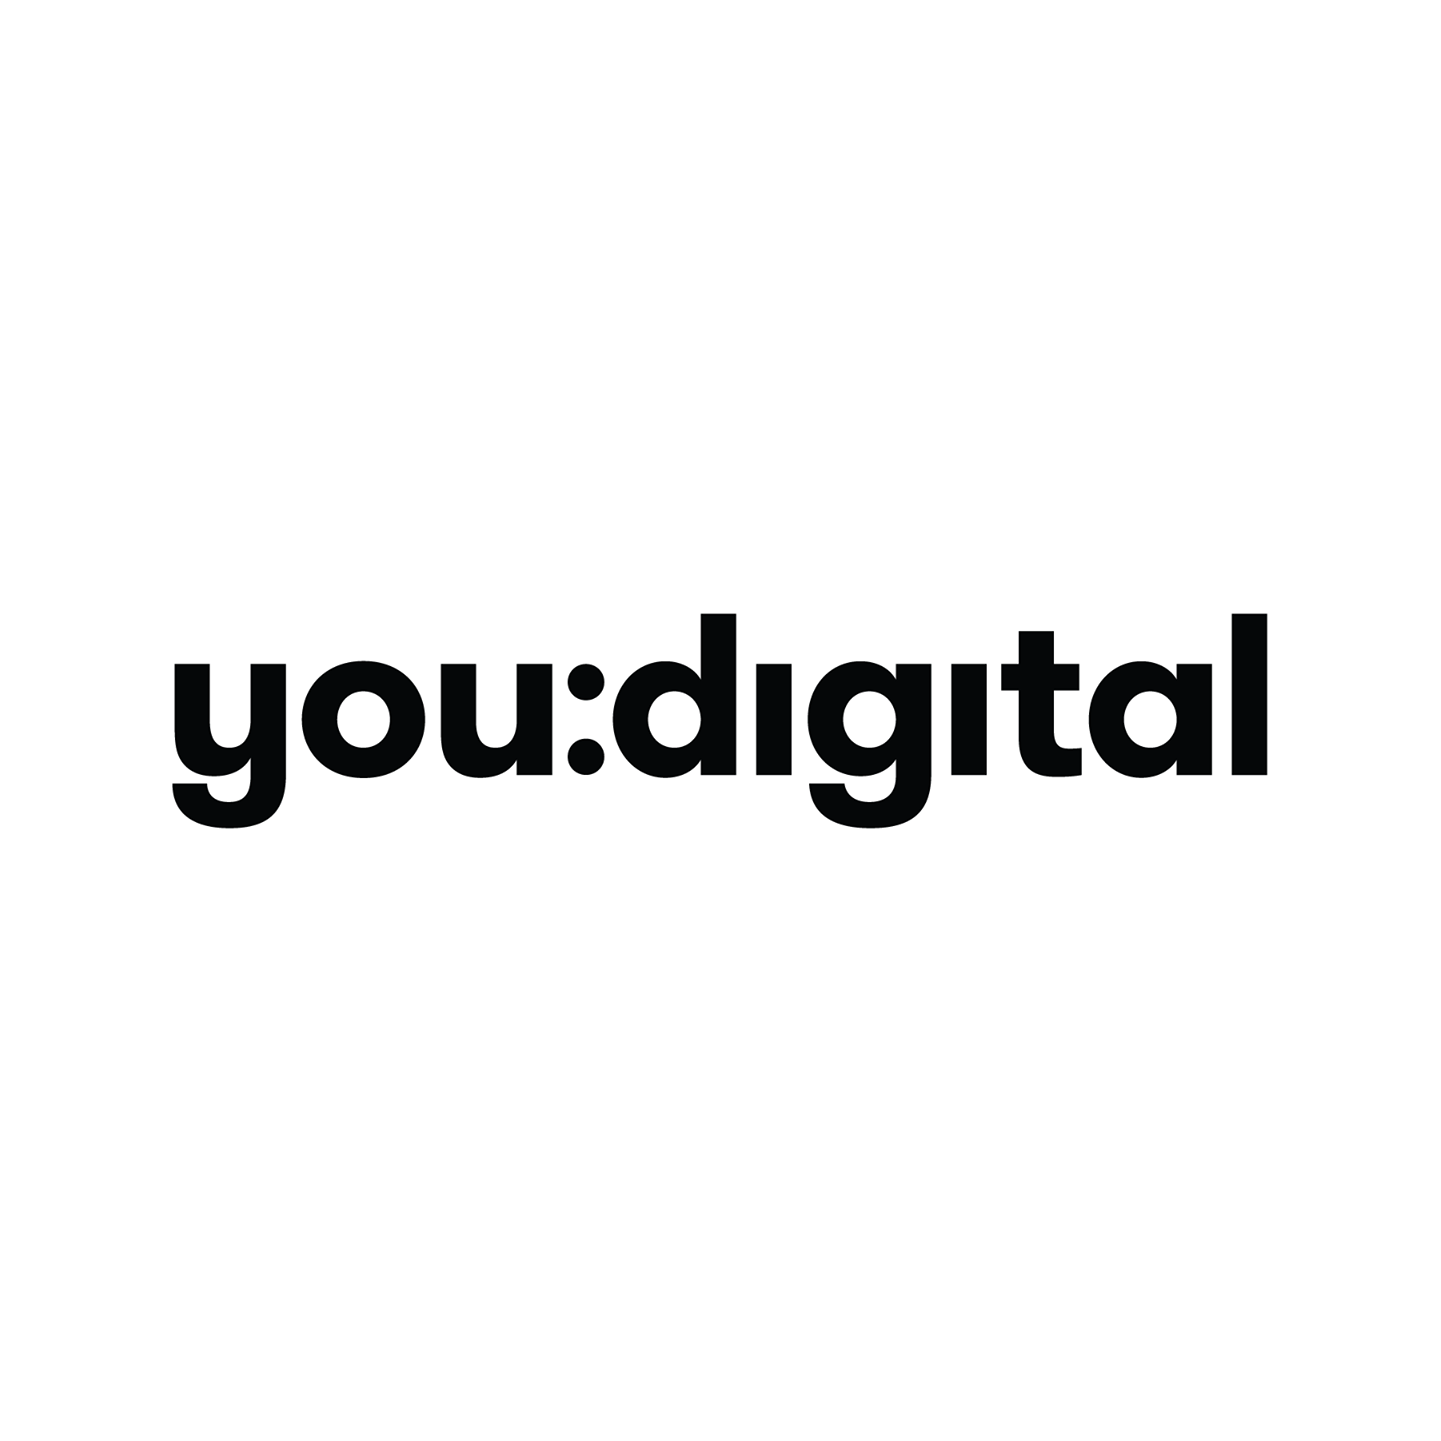 Youdigital   Salesforce Consulting